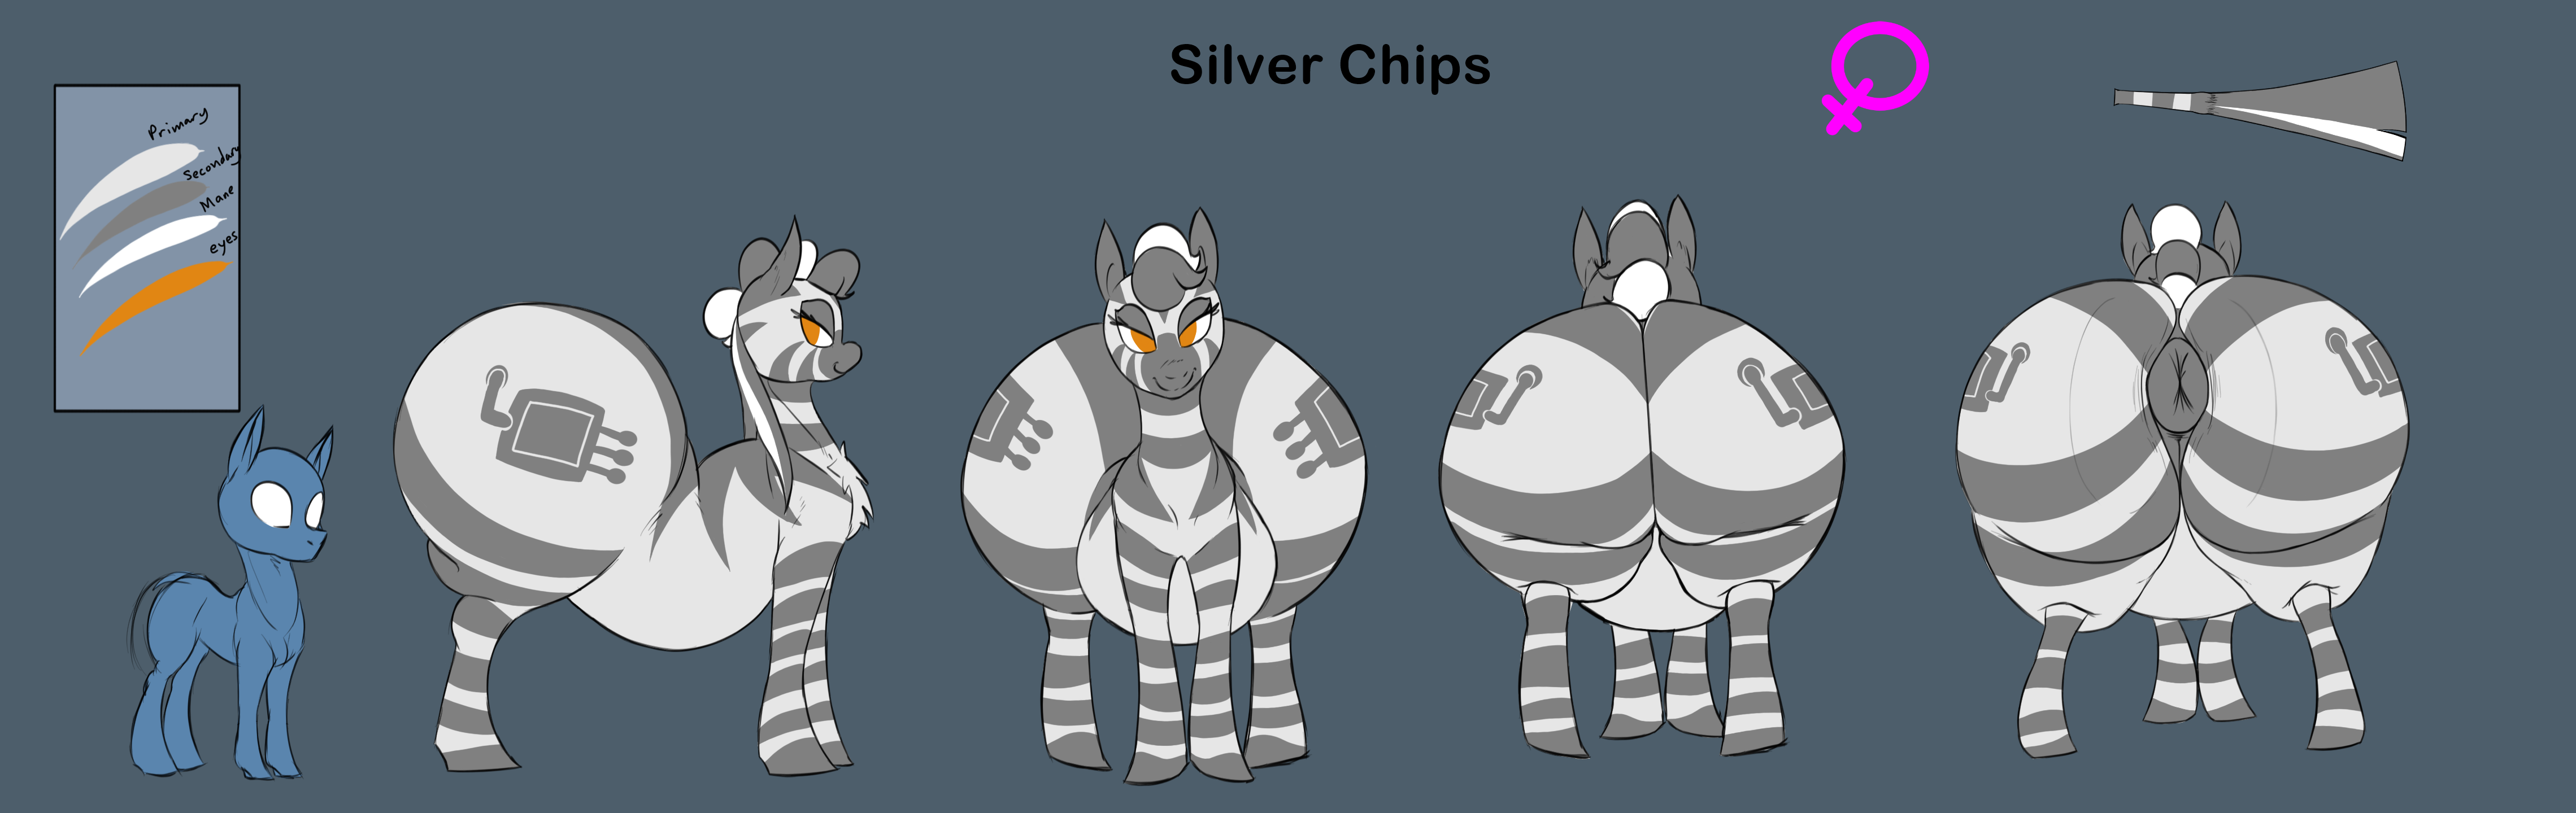 Chip and potato gay zebras